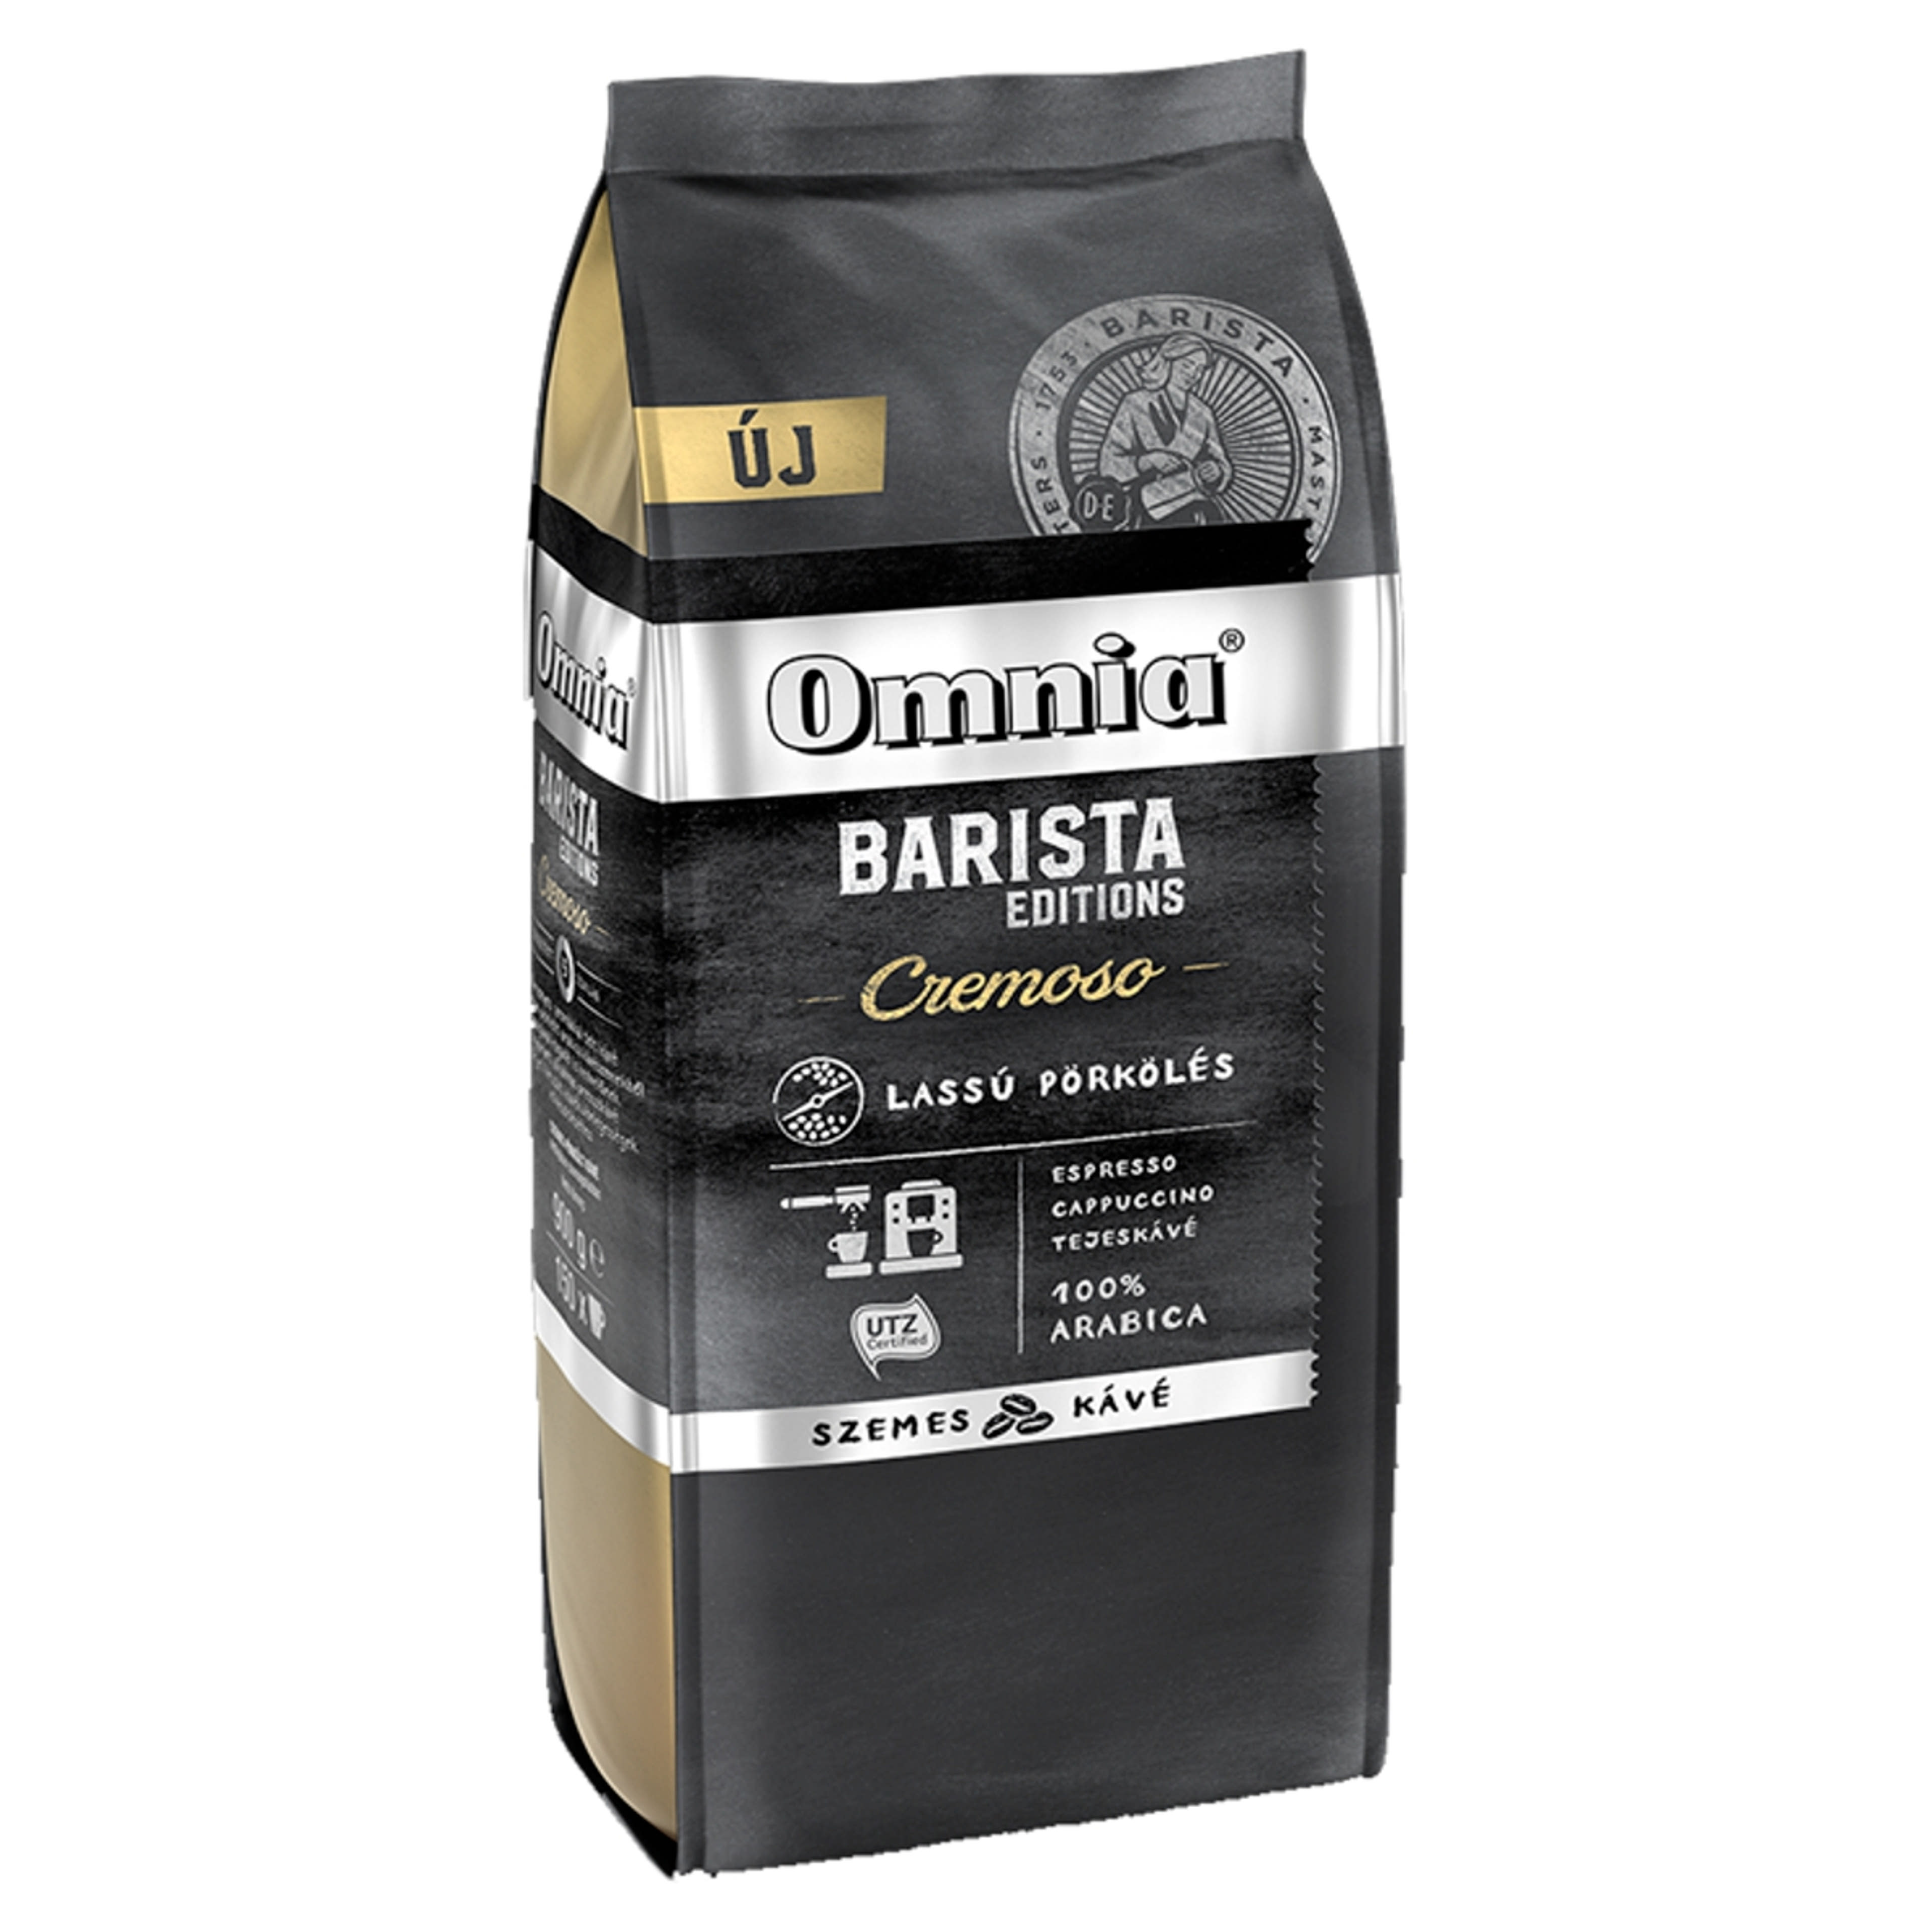 Douwe Egberts Omnia Barista Edition Cremoso kávé - 900 g-2